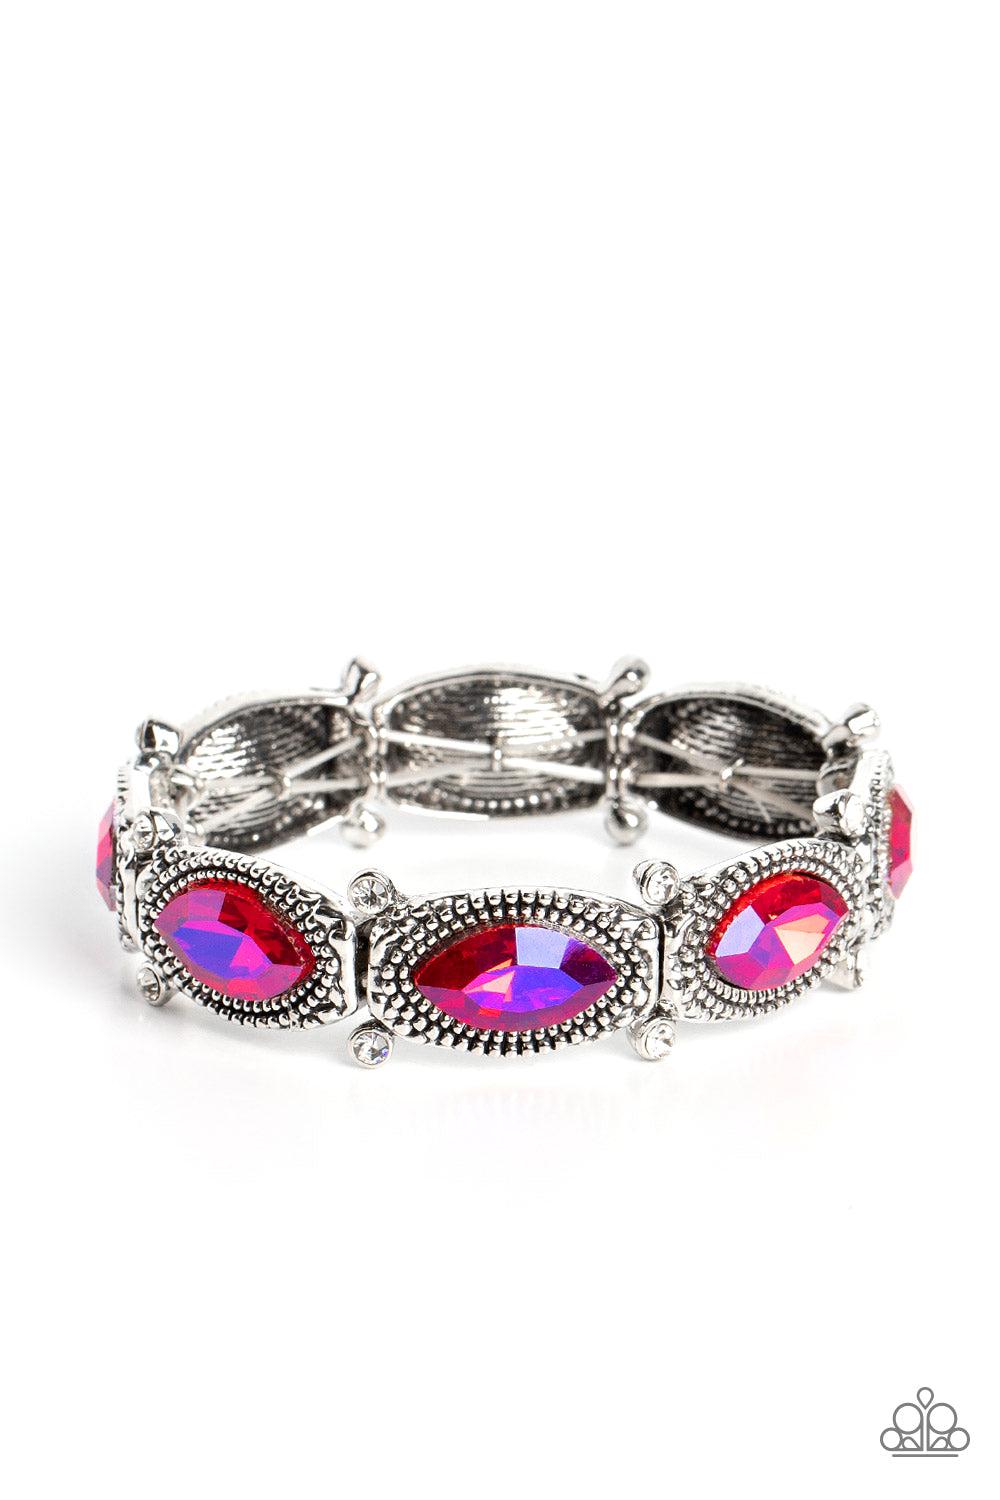 Dancing Diva Pink Rhinestone Bracelet - Paparazzi Accessories- lightbox - CarasShop.com - $5 Jewelry by Cara Jewels